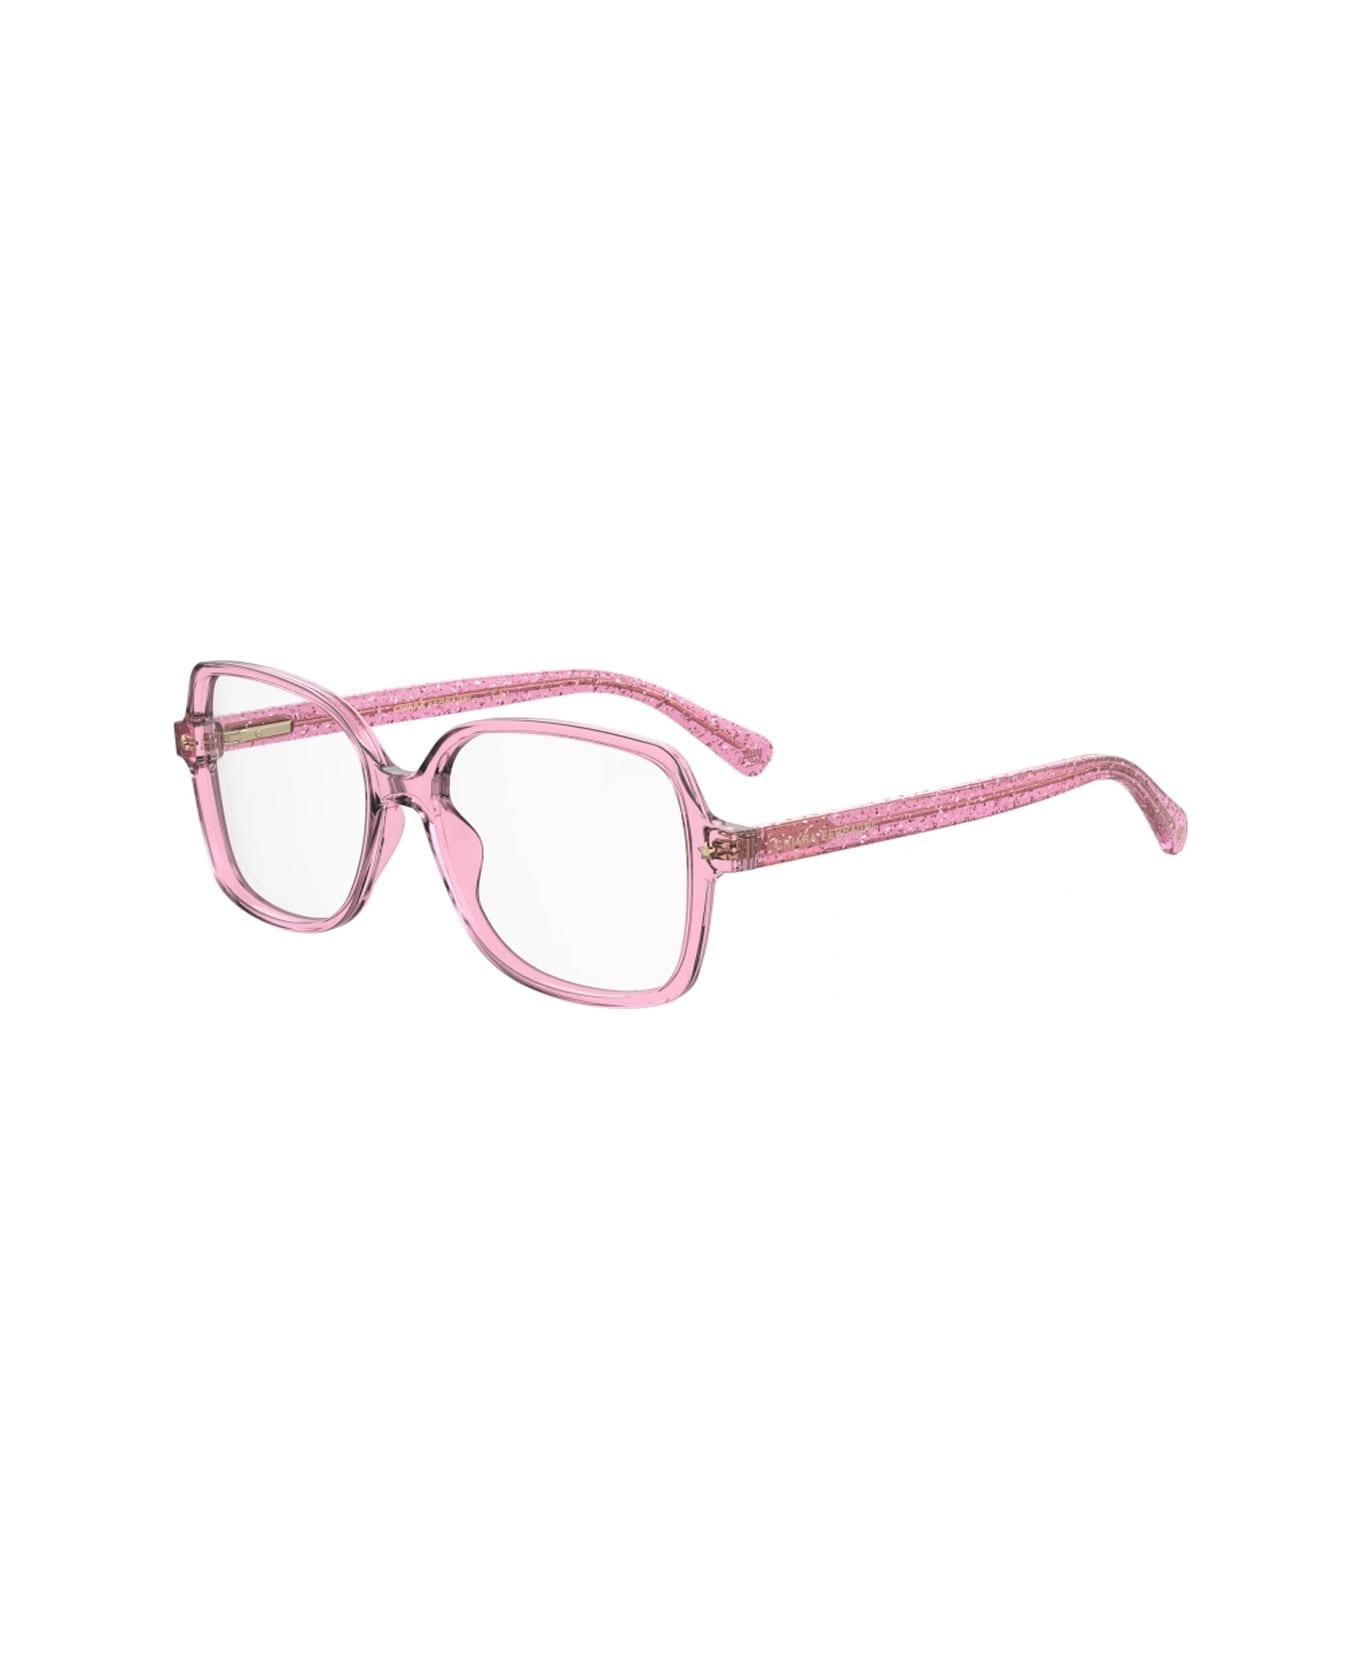 Chiara Ferragni Cf 1026 35j/16 Pink Glasses - Rosa